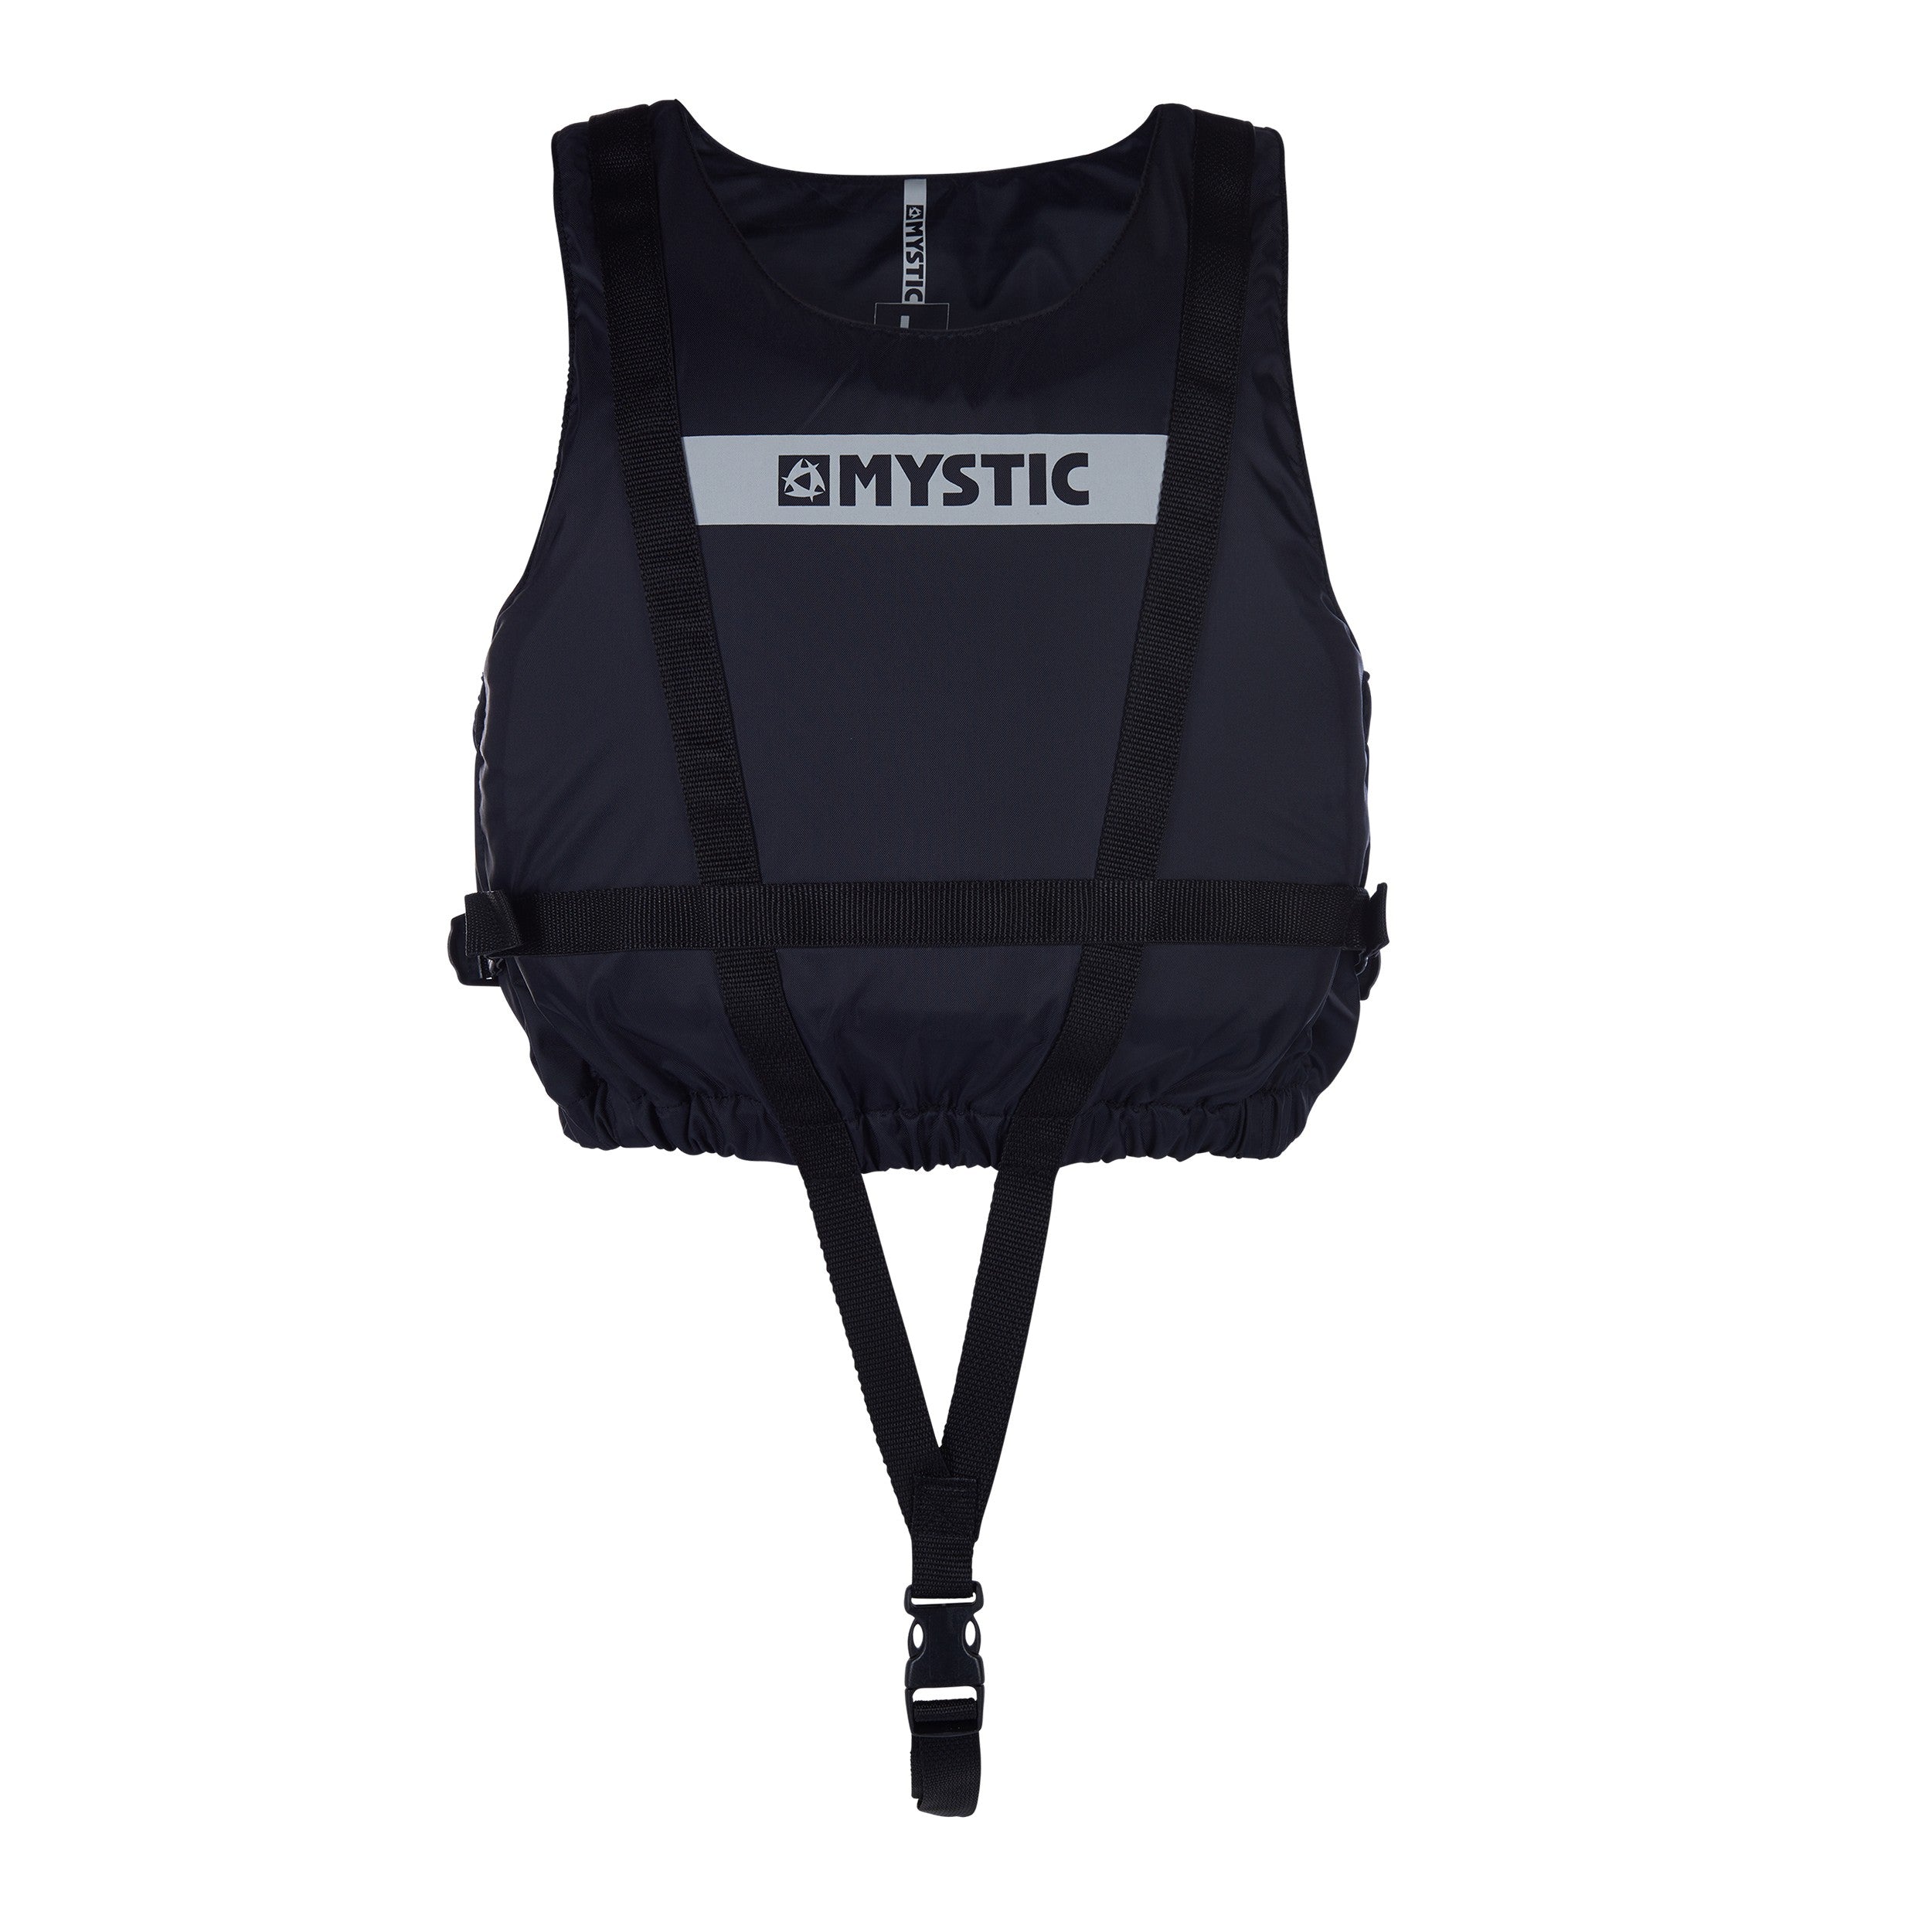 Mystic Brand Floatation Vest - Black 